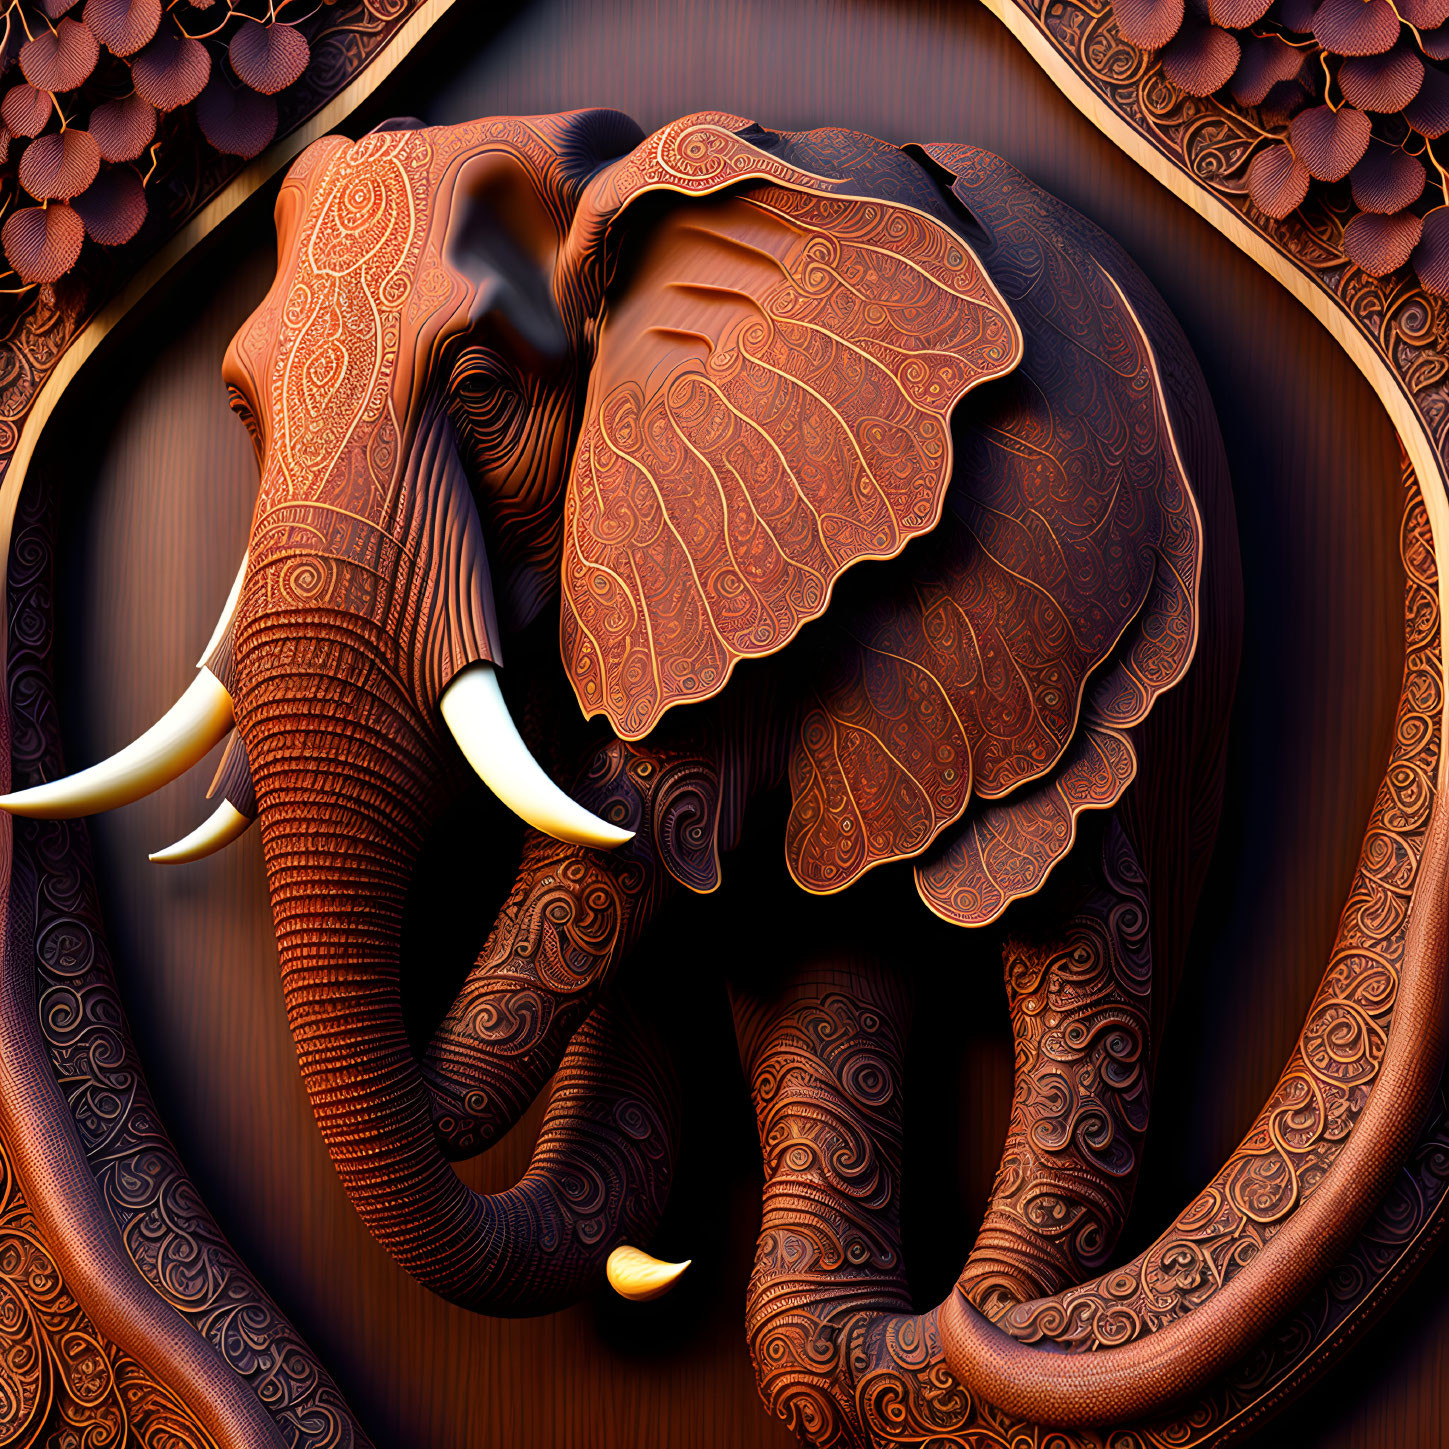 Intricate patterns on embellished elephant in digital art